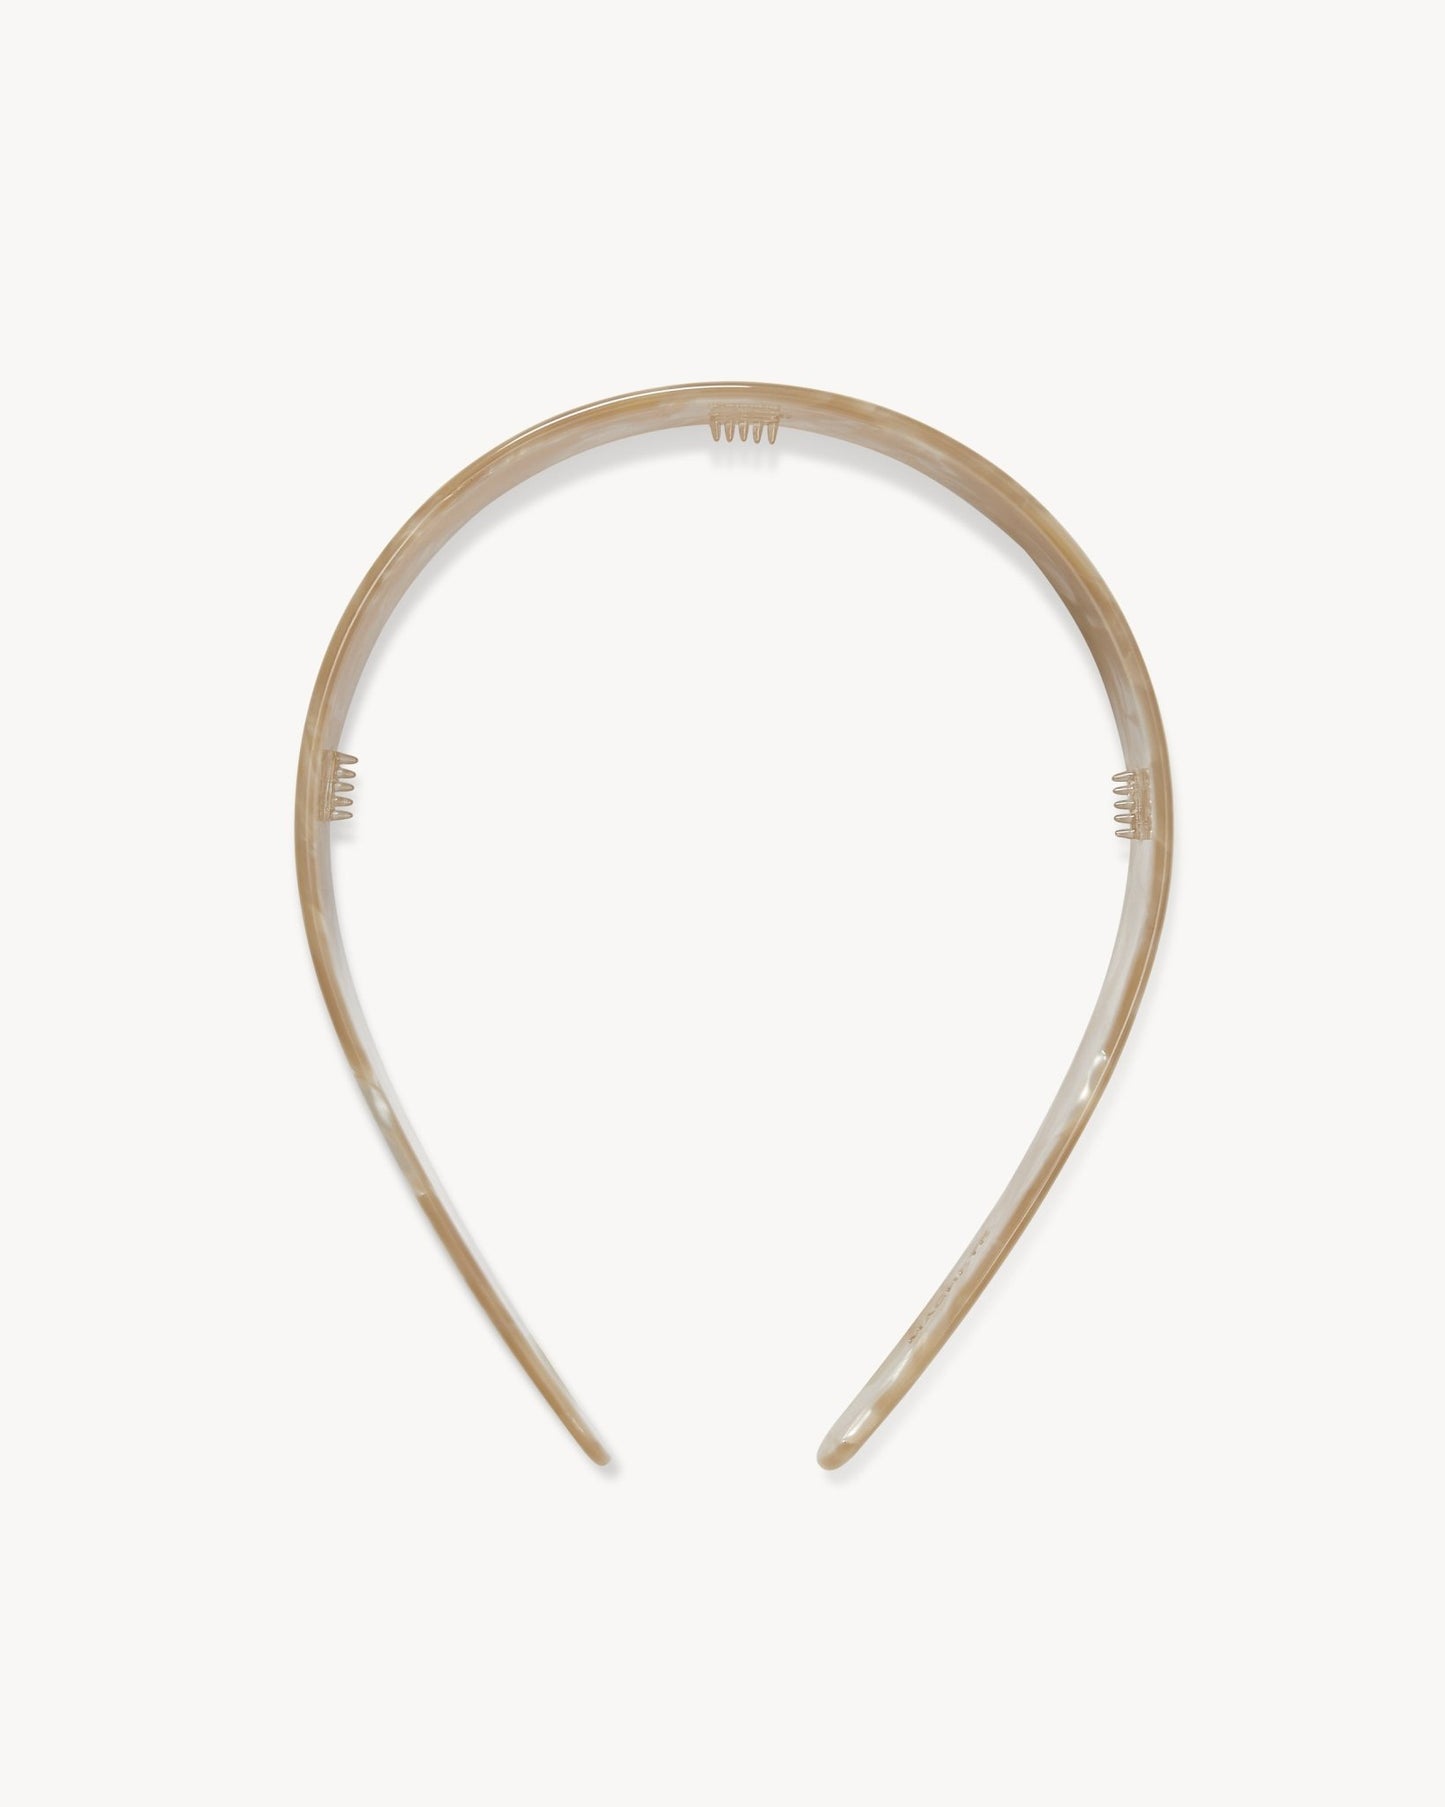 Wide Headband in Sand Shell - MACHETE